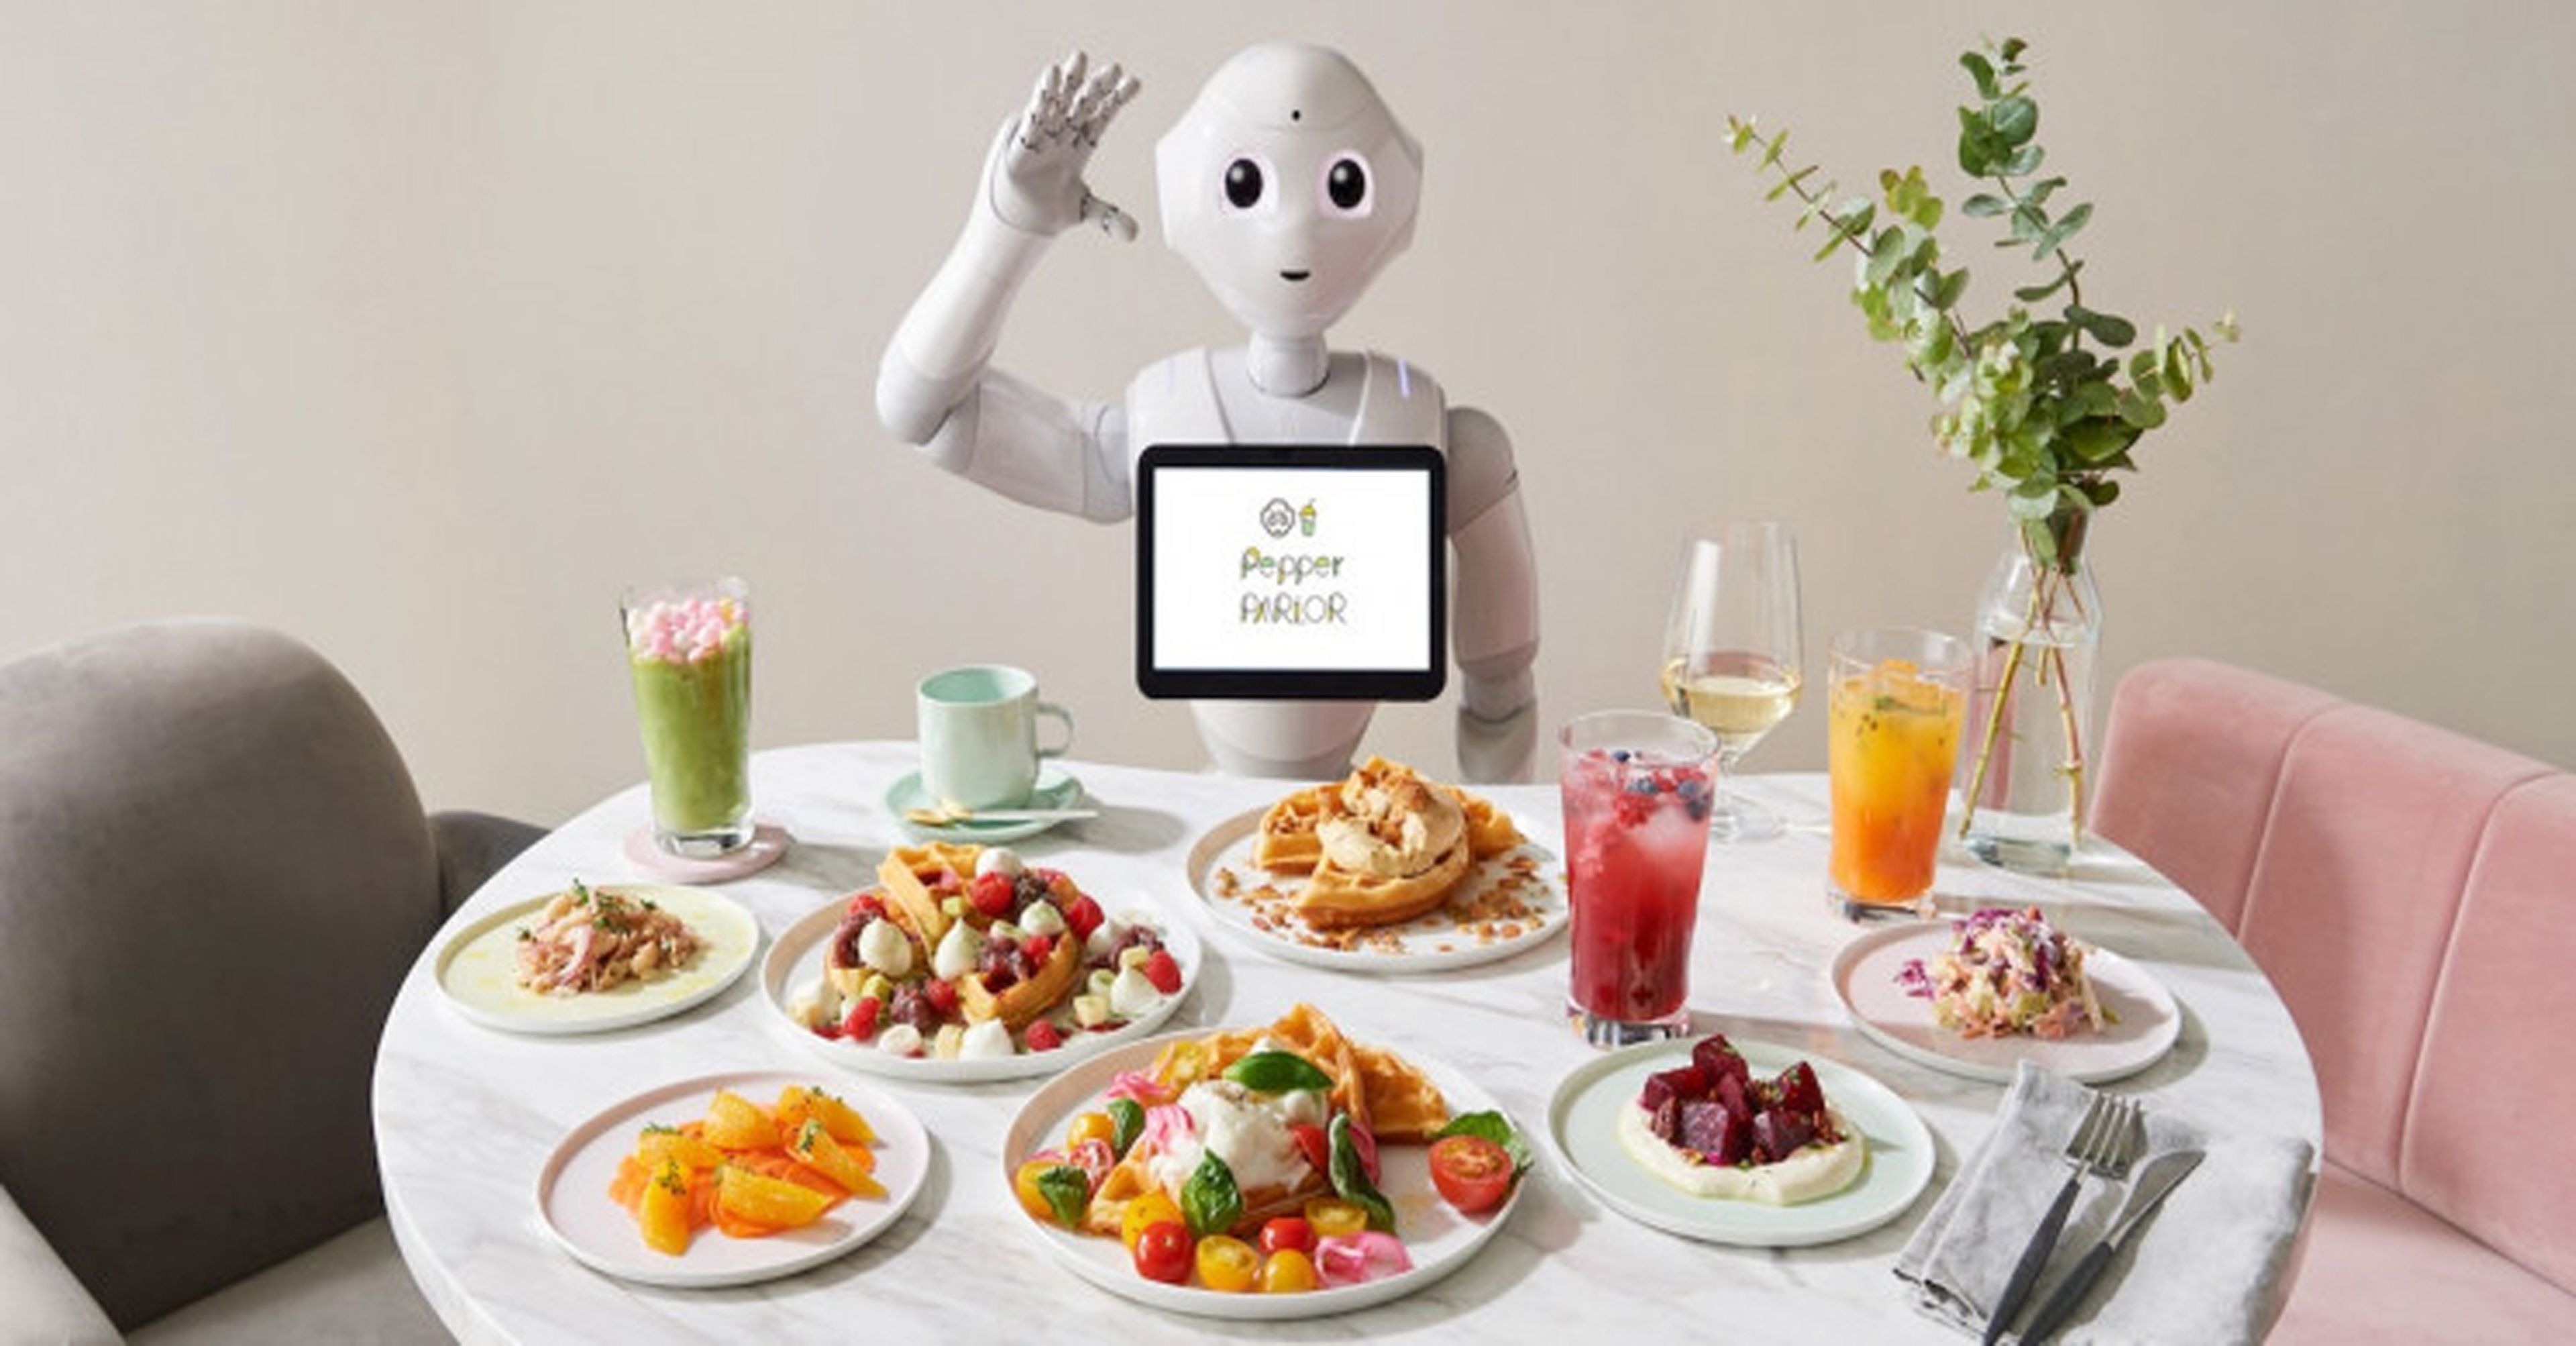 Robot Pepper camarero